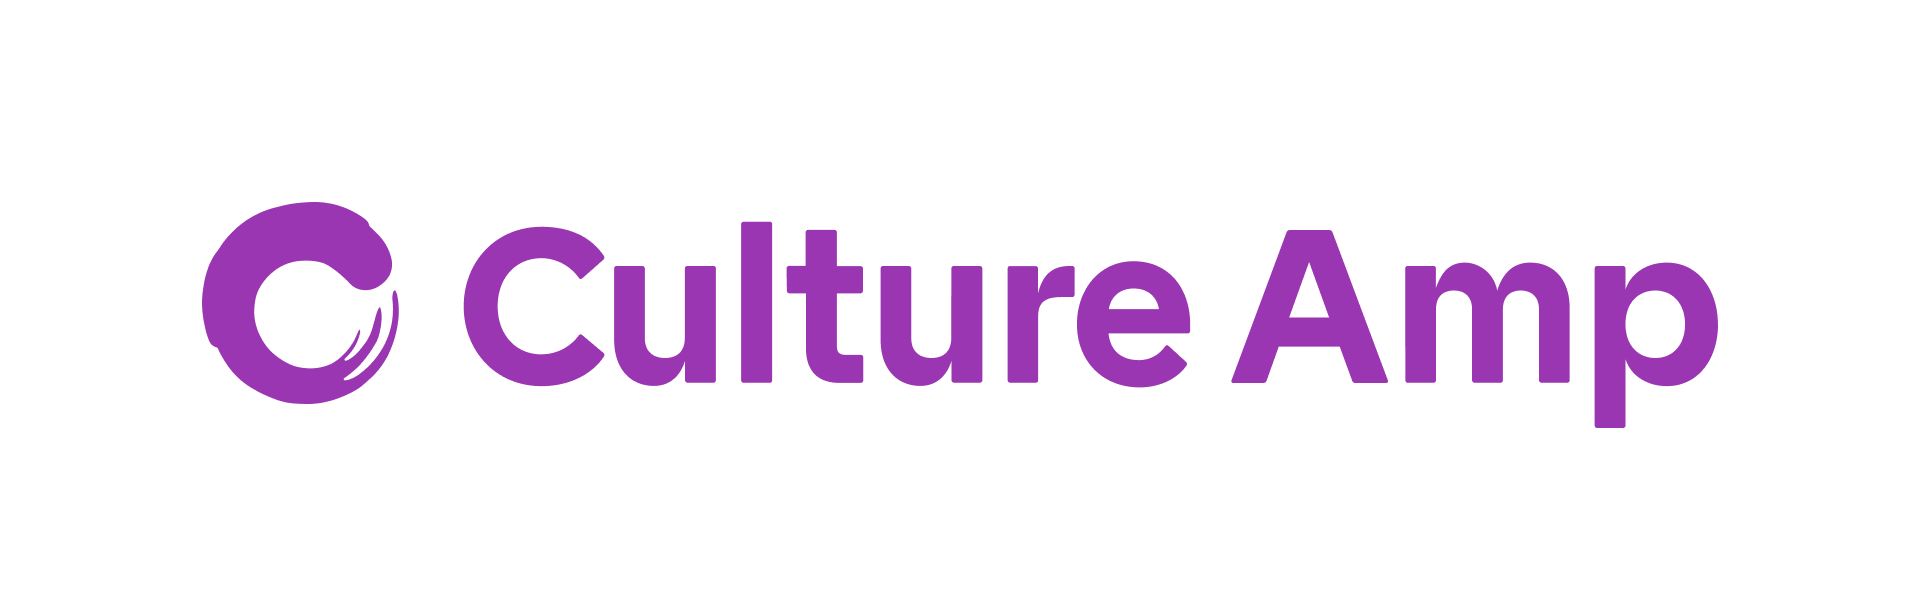 culture-amp-logo-full-purple_1